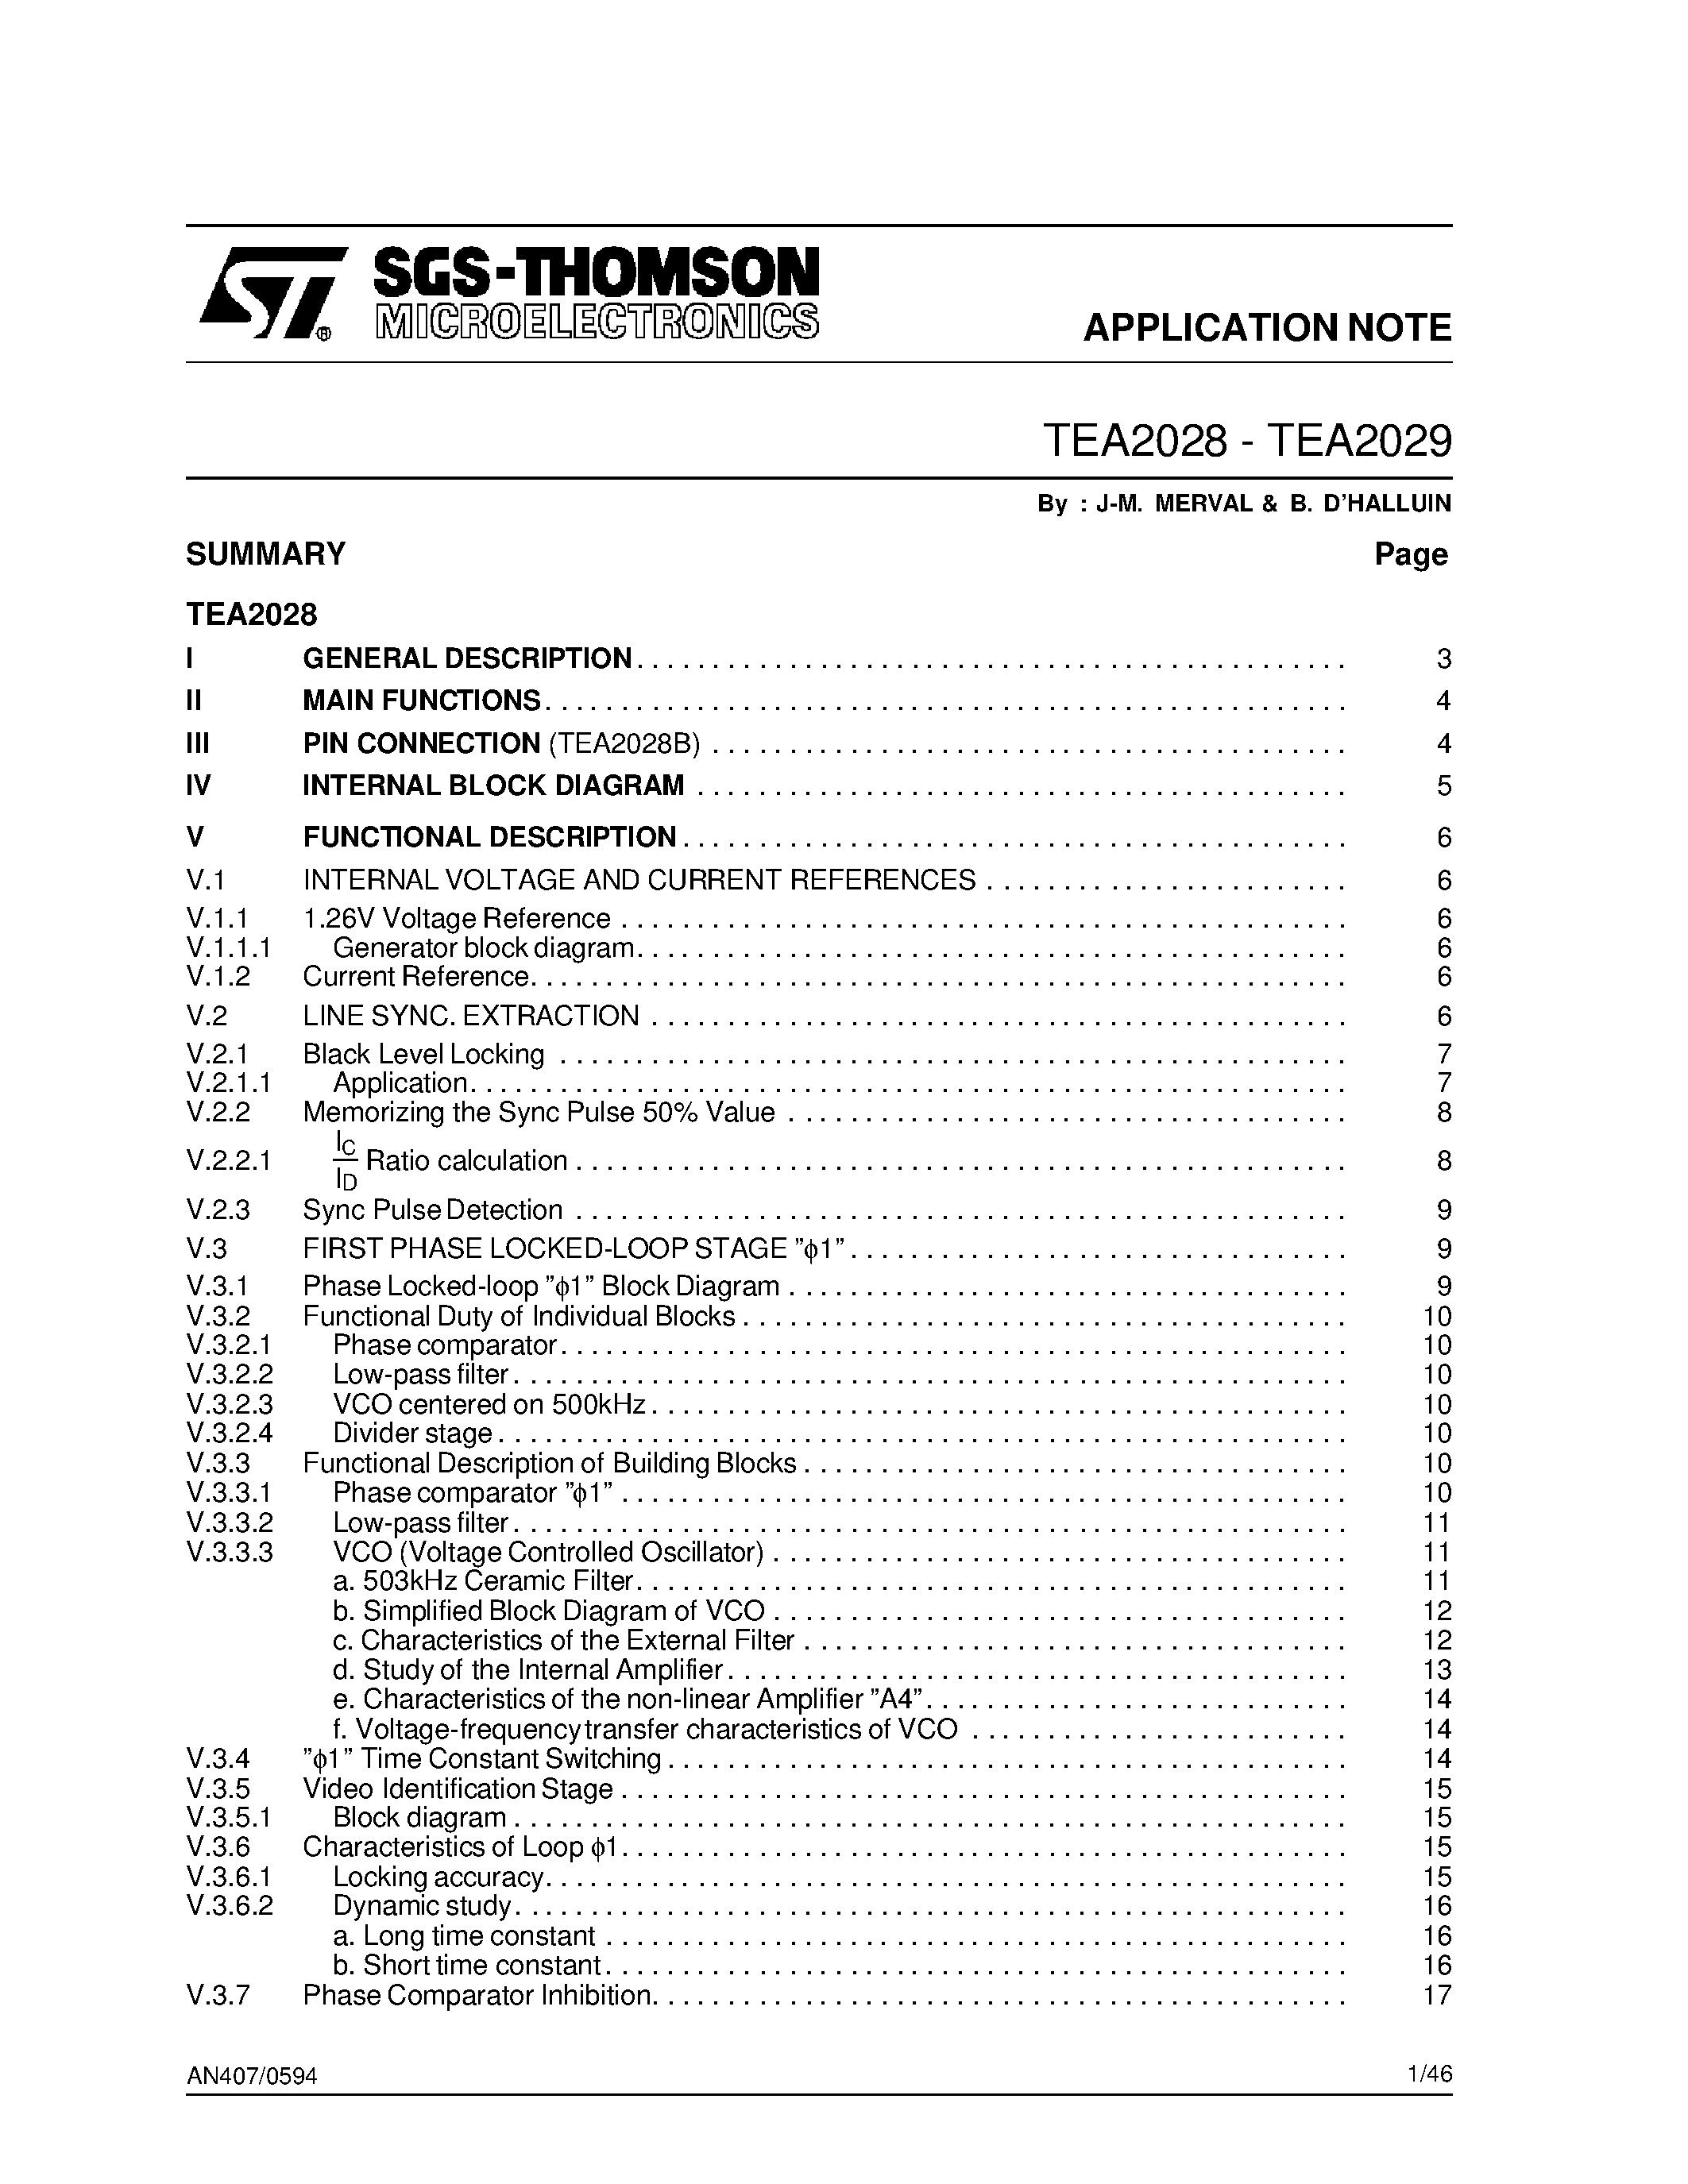 Datasheet TEA2028-TEA2029 - APPLICATION NOTE page 1